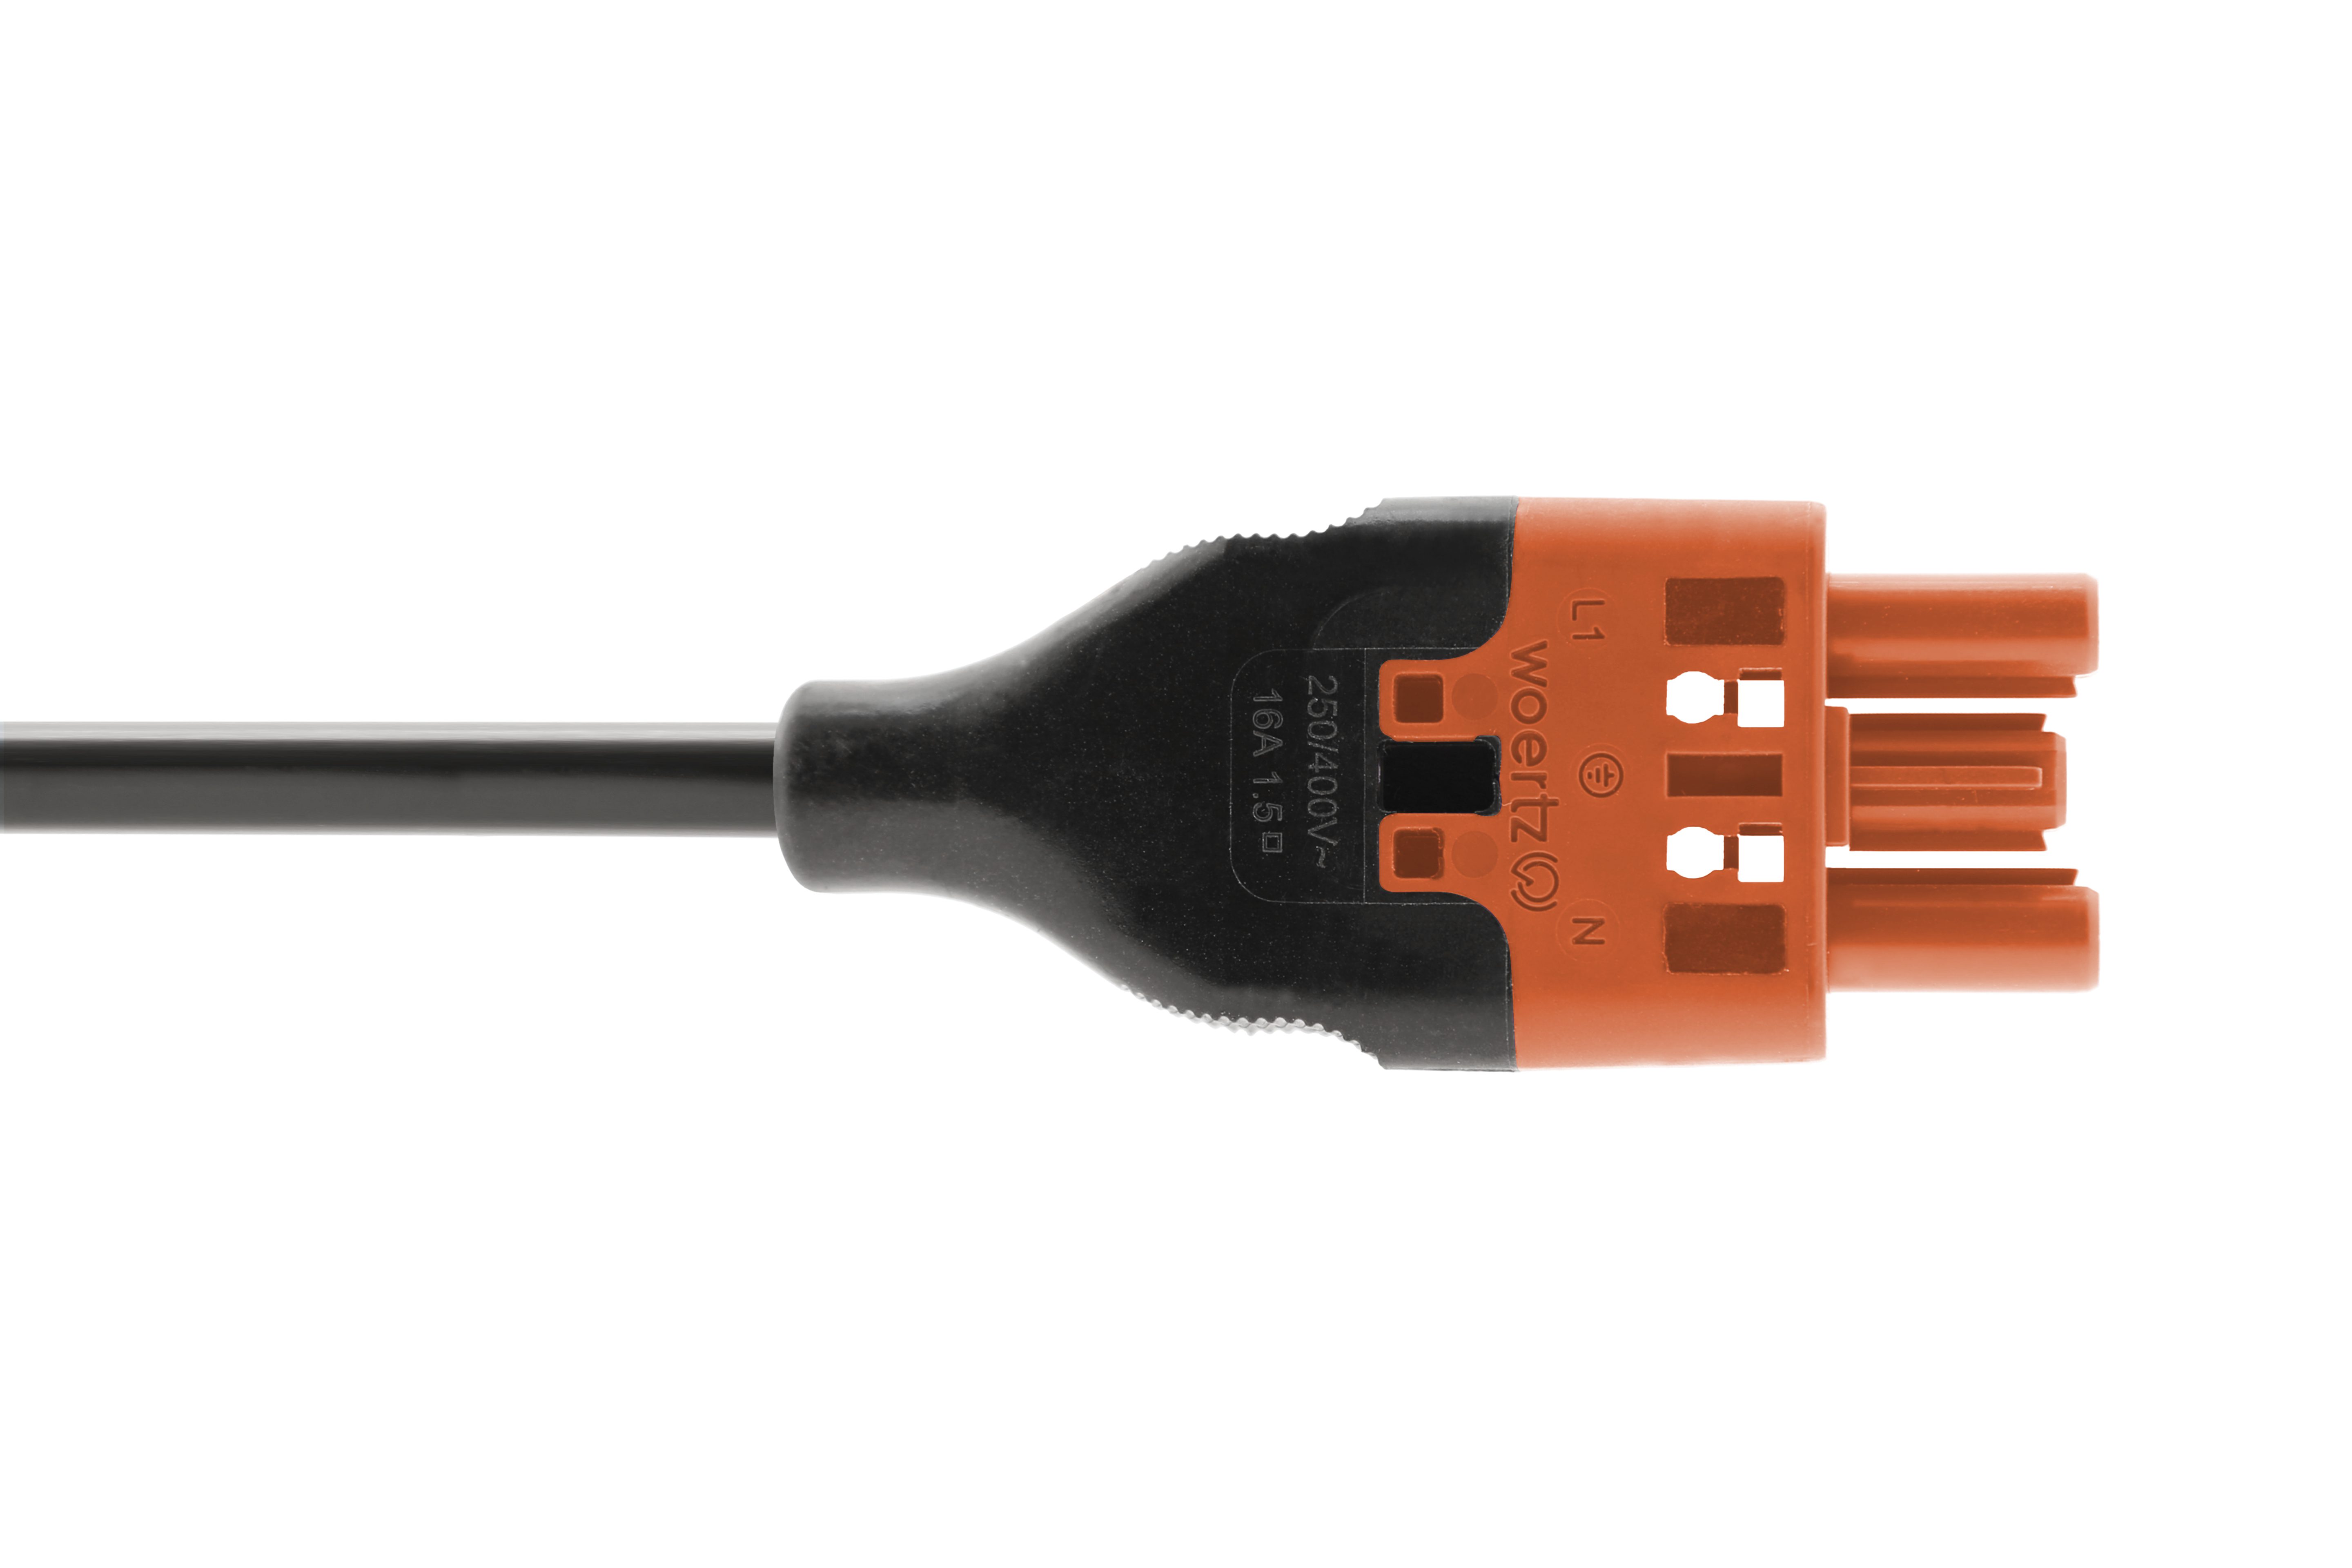 Plug connections code 3 for mains voltage, 3-pole (LNPE)